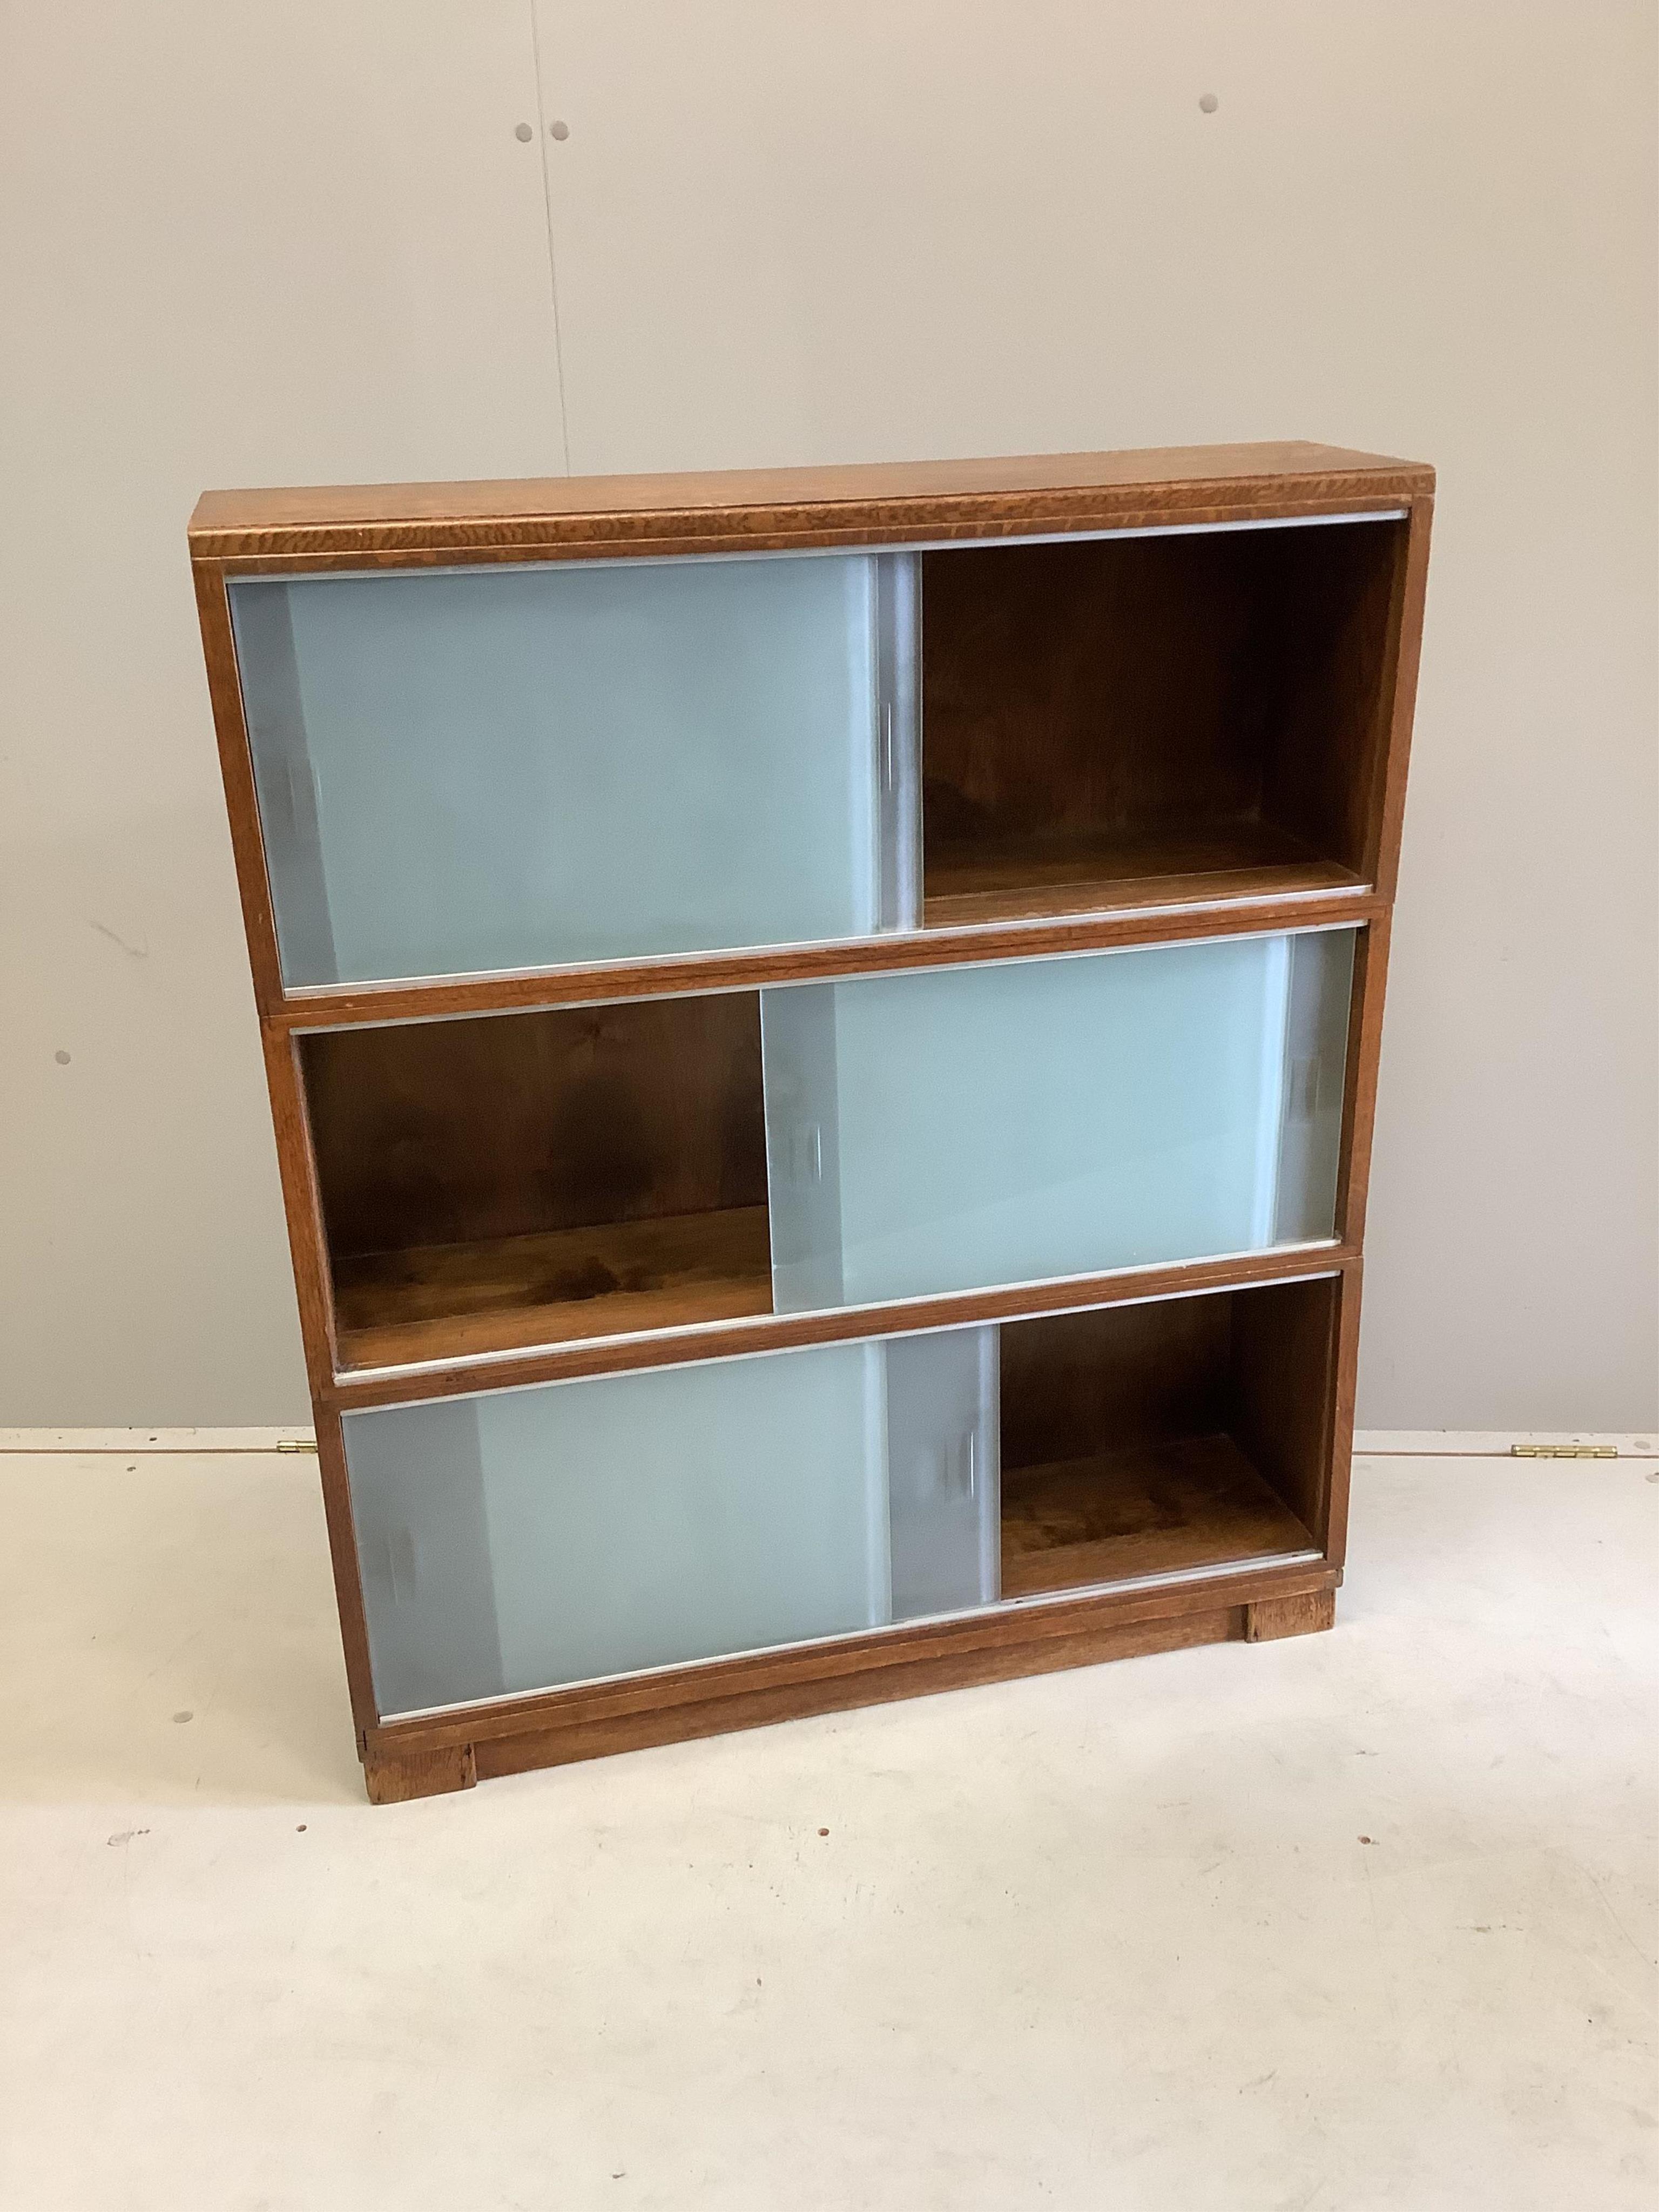 A three section Minty oak bookcase, width 89cm, depth 23cm, height 104cm